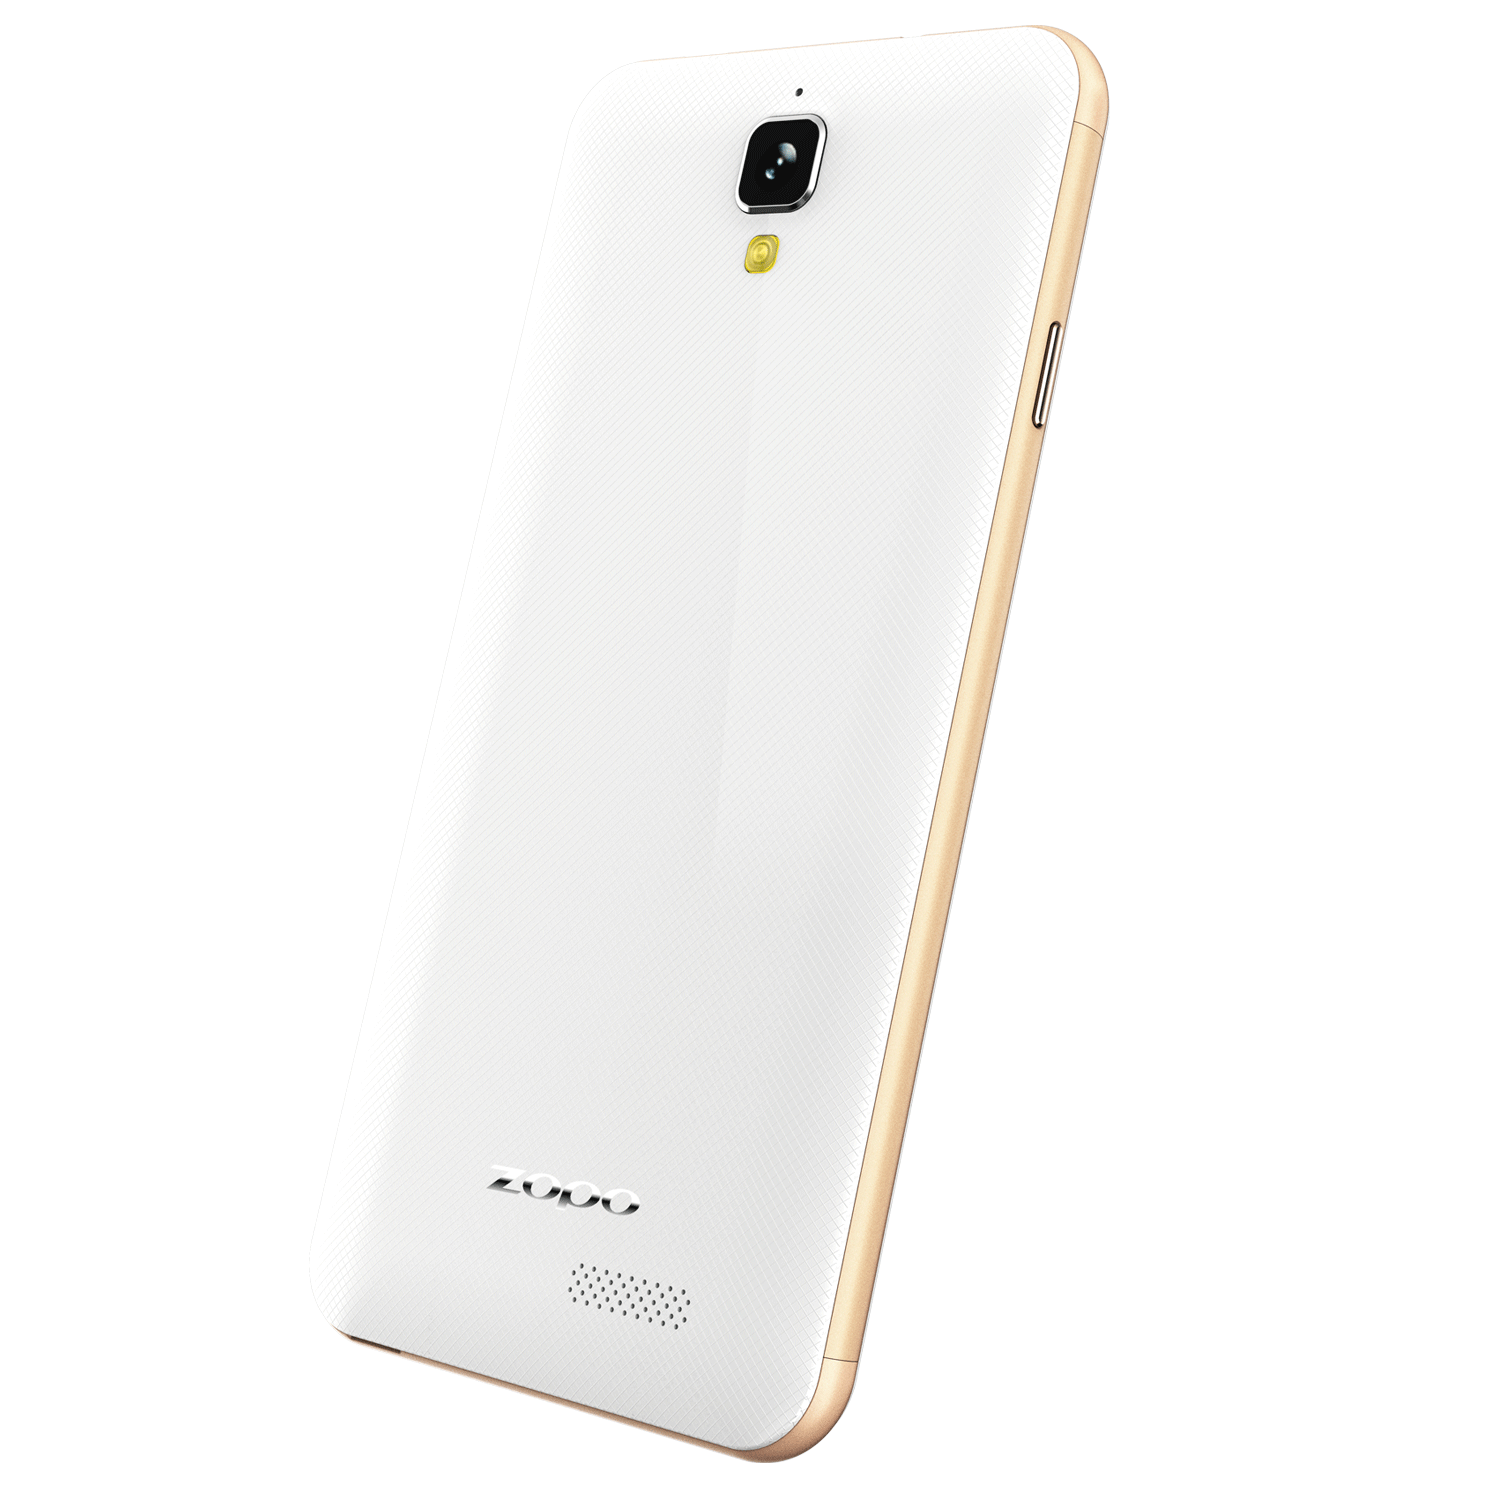 ZOPO ZP530 Smartphone 4G 64bit Quad Core 1.5GHz 5.0 Inch HD Screen Android 4.4- White